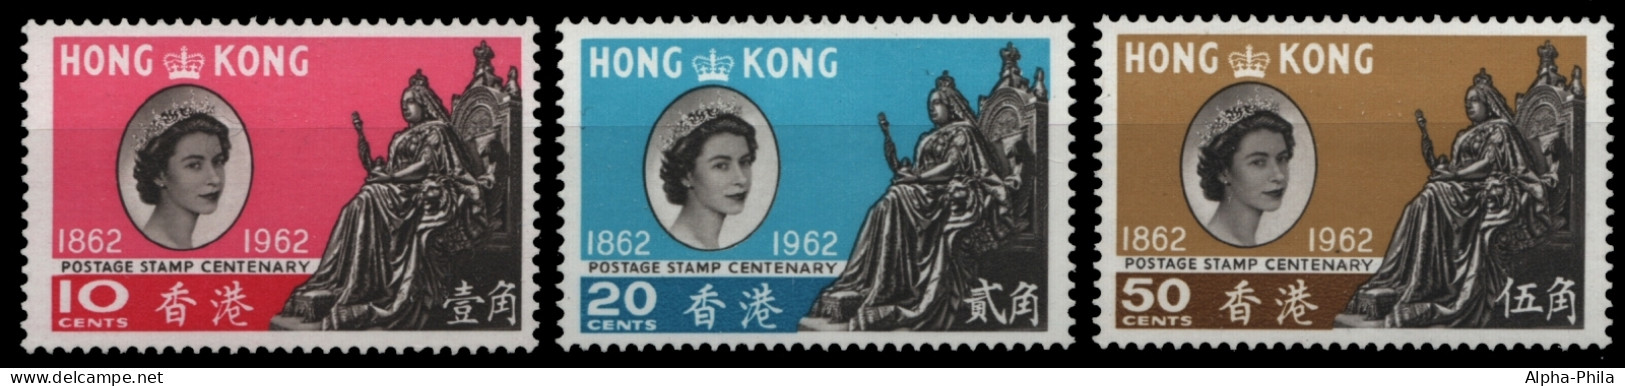 Hongkong 1962 - Mi-Nr. 193-195 ** - MNH - 100 Jahre Hongkong-Briefmarken - Nuevos